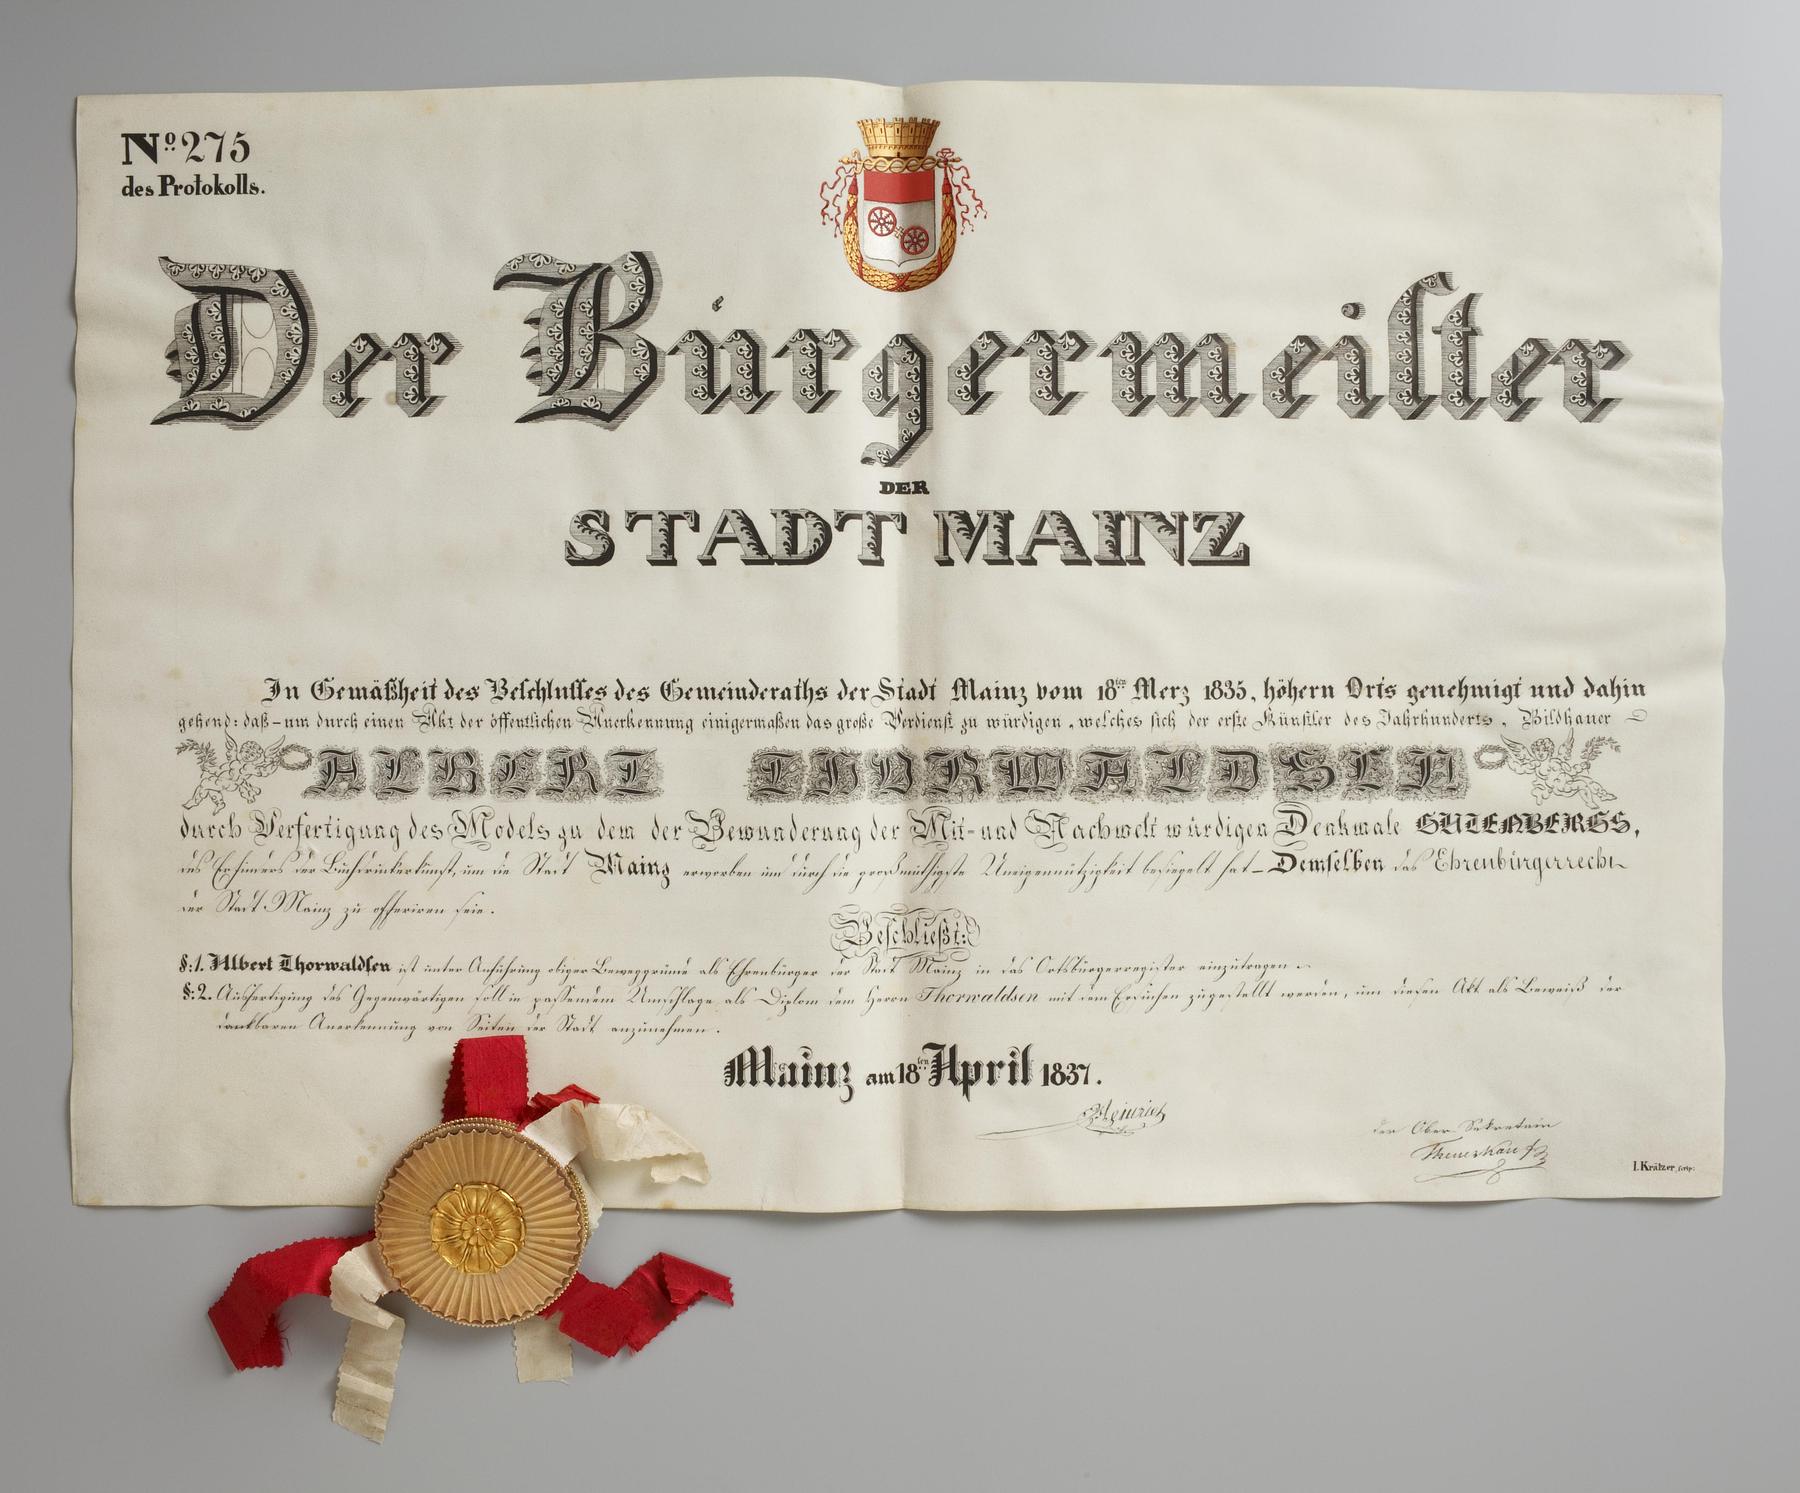 Thorvaldsens æresborgerdiplom fra staden Mainz, N35